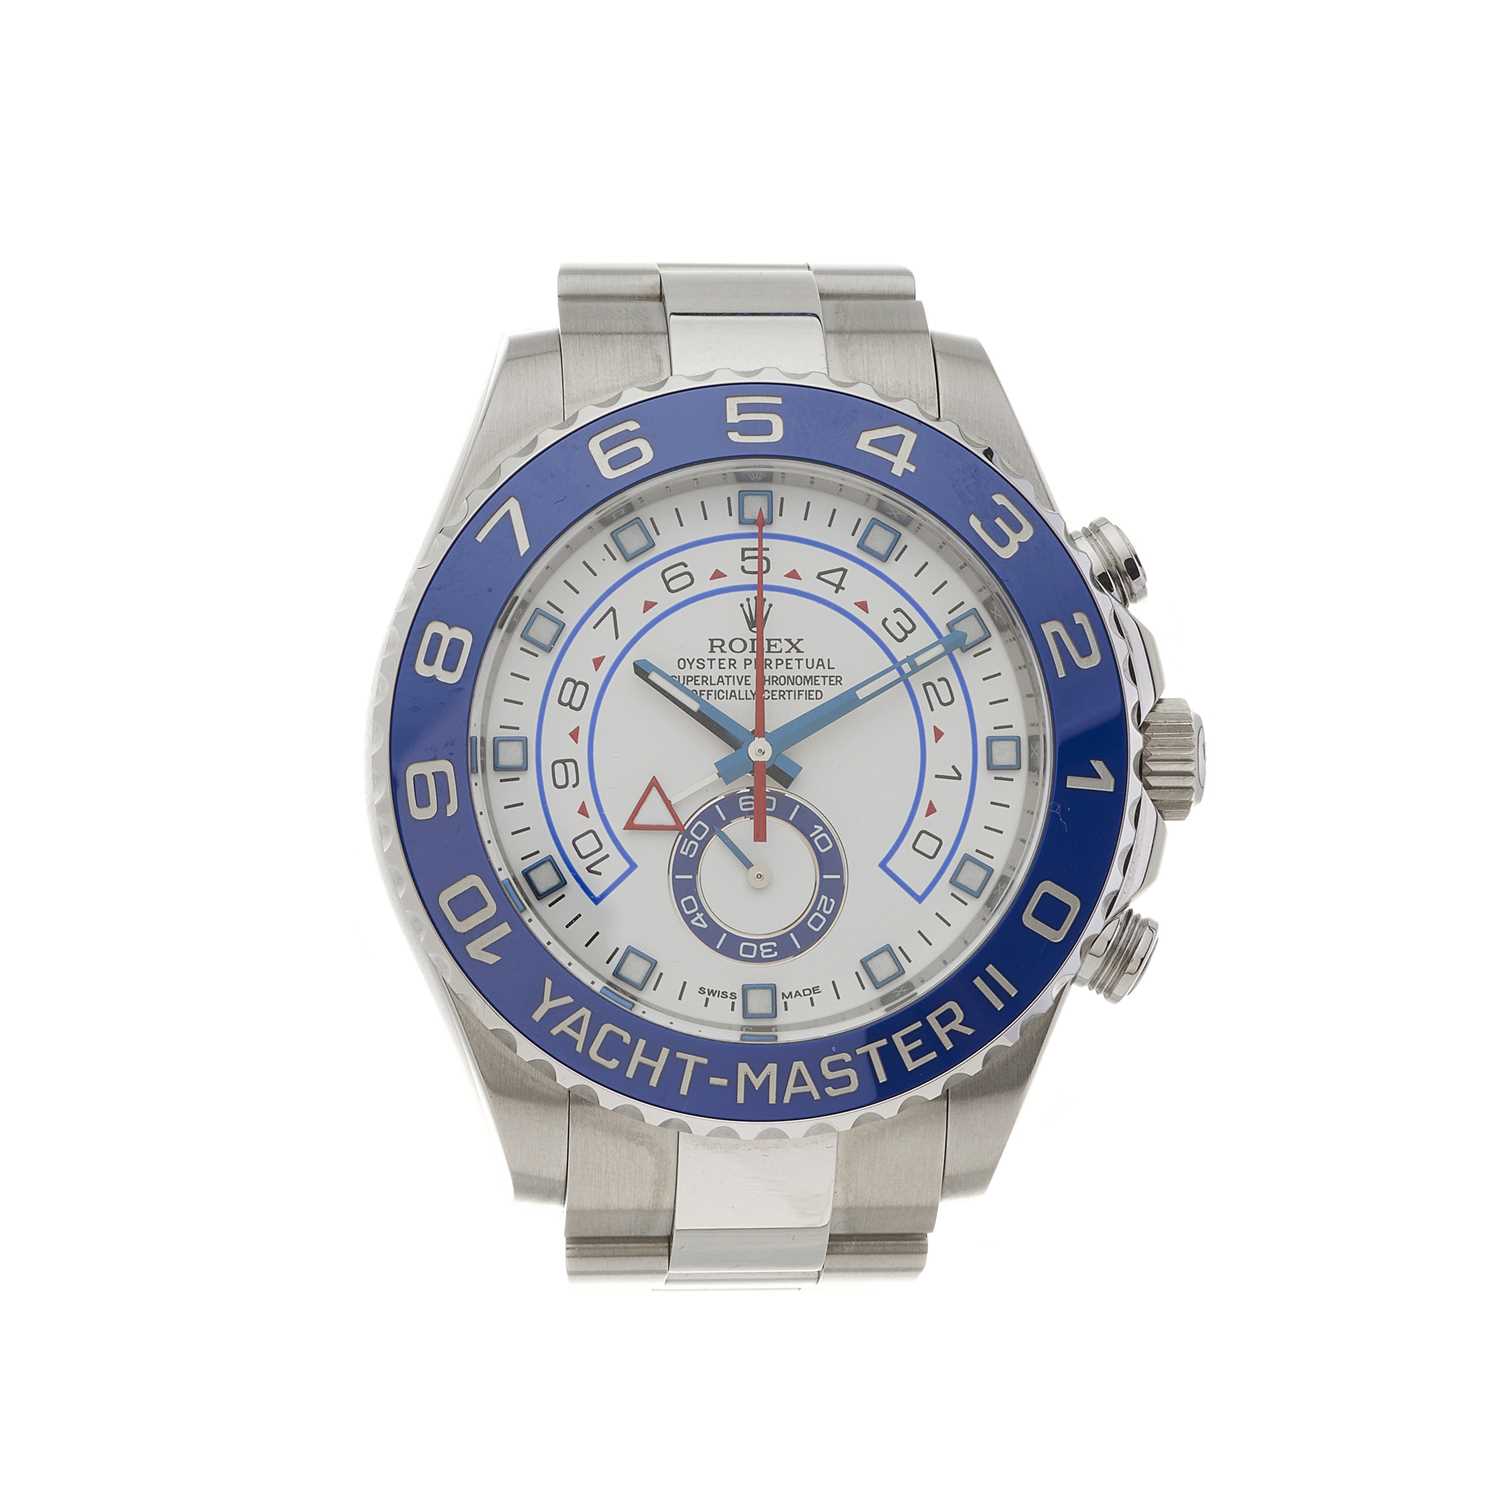 239 - Rolex, an Oyster Perpetual Yacht-Master II bracelet watch